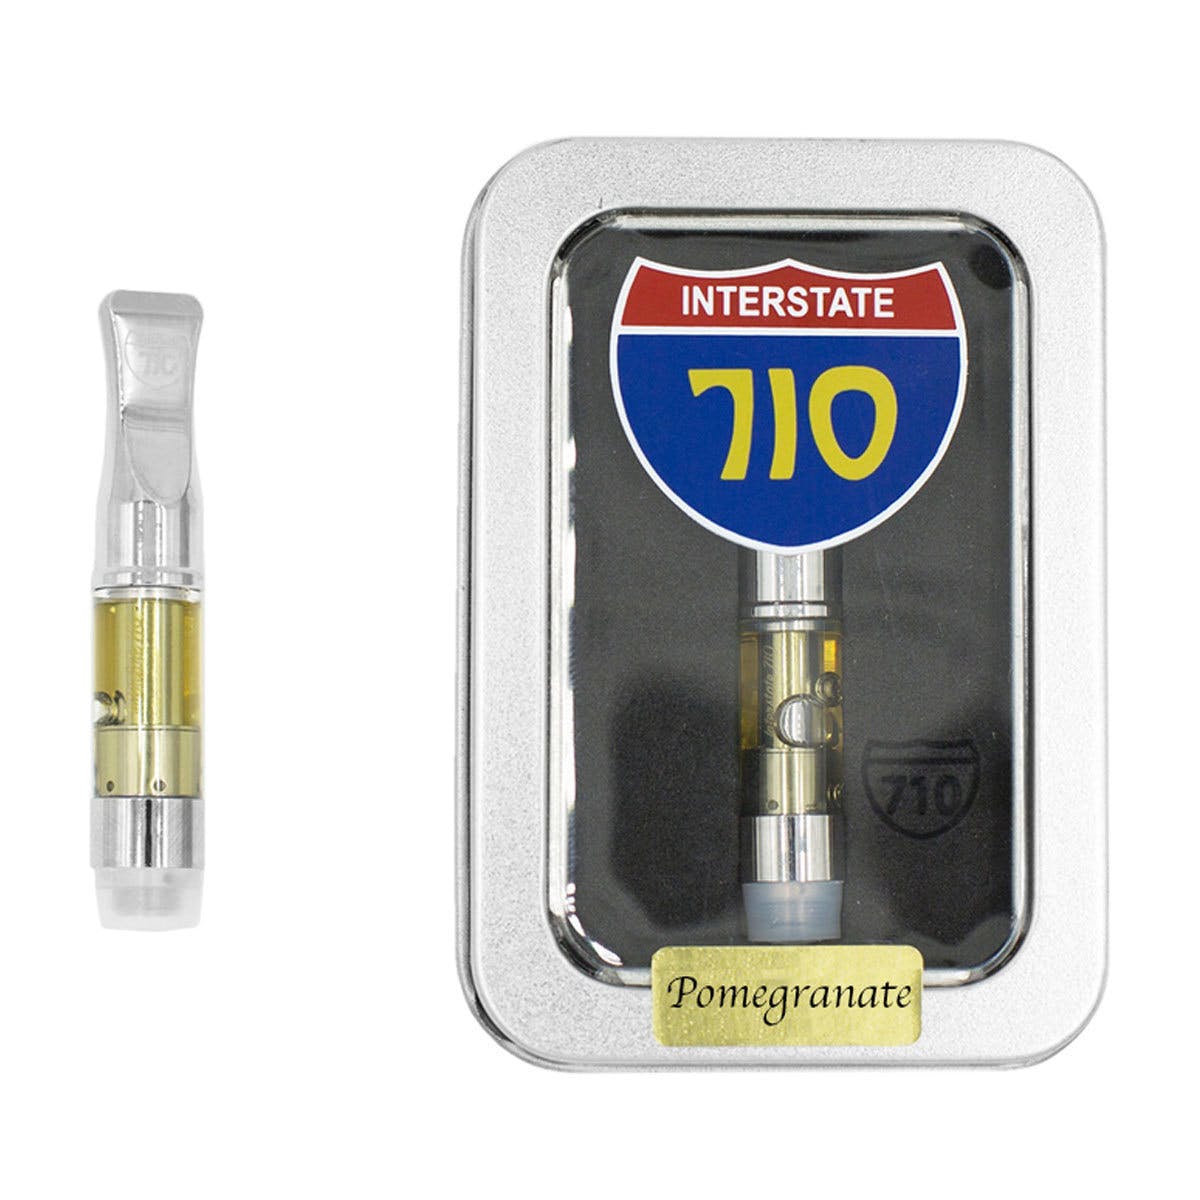 concentrate-interstate-cannabinoids-710-pomegranate-cartridge